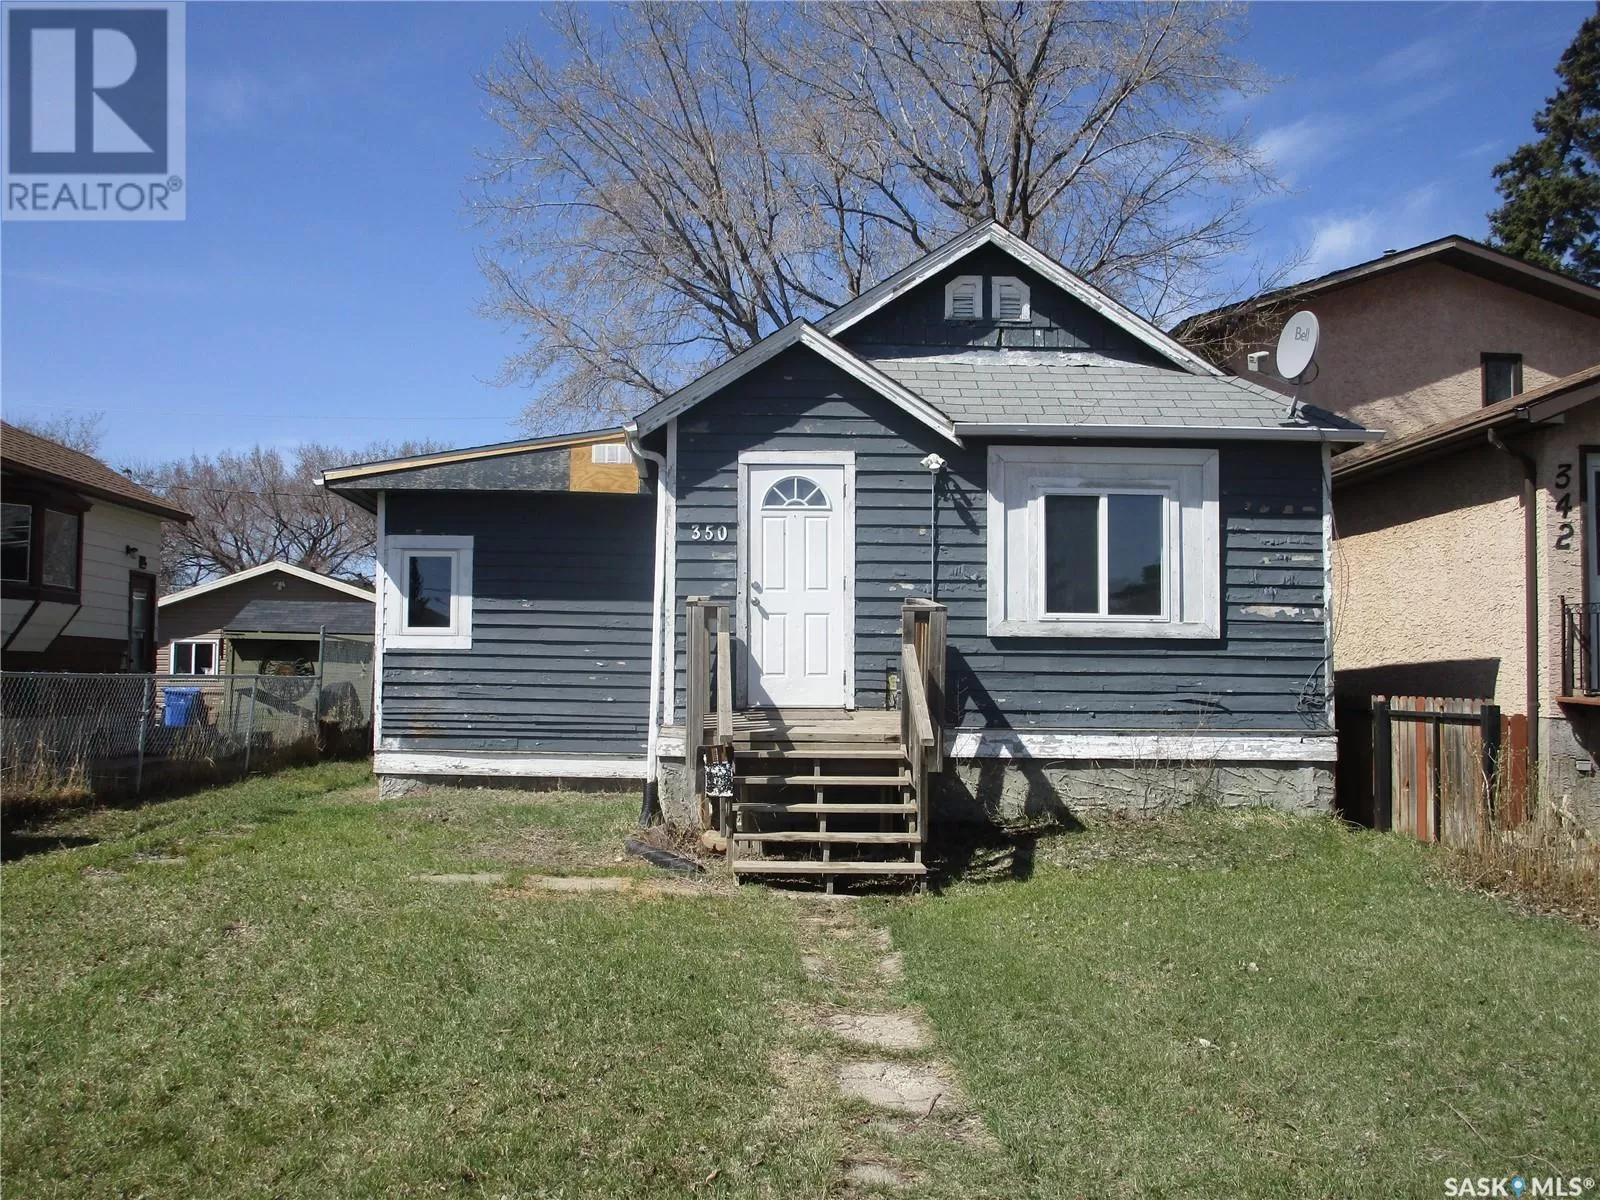 House for rent: 350 Hamilton Street, Regina, Saskatchewan S4R 2A6